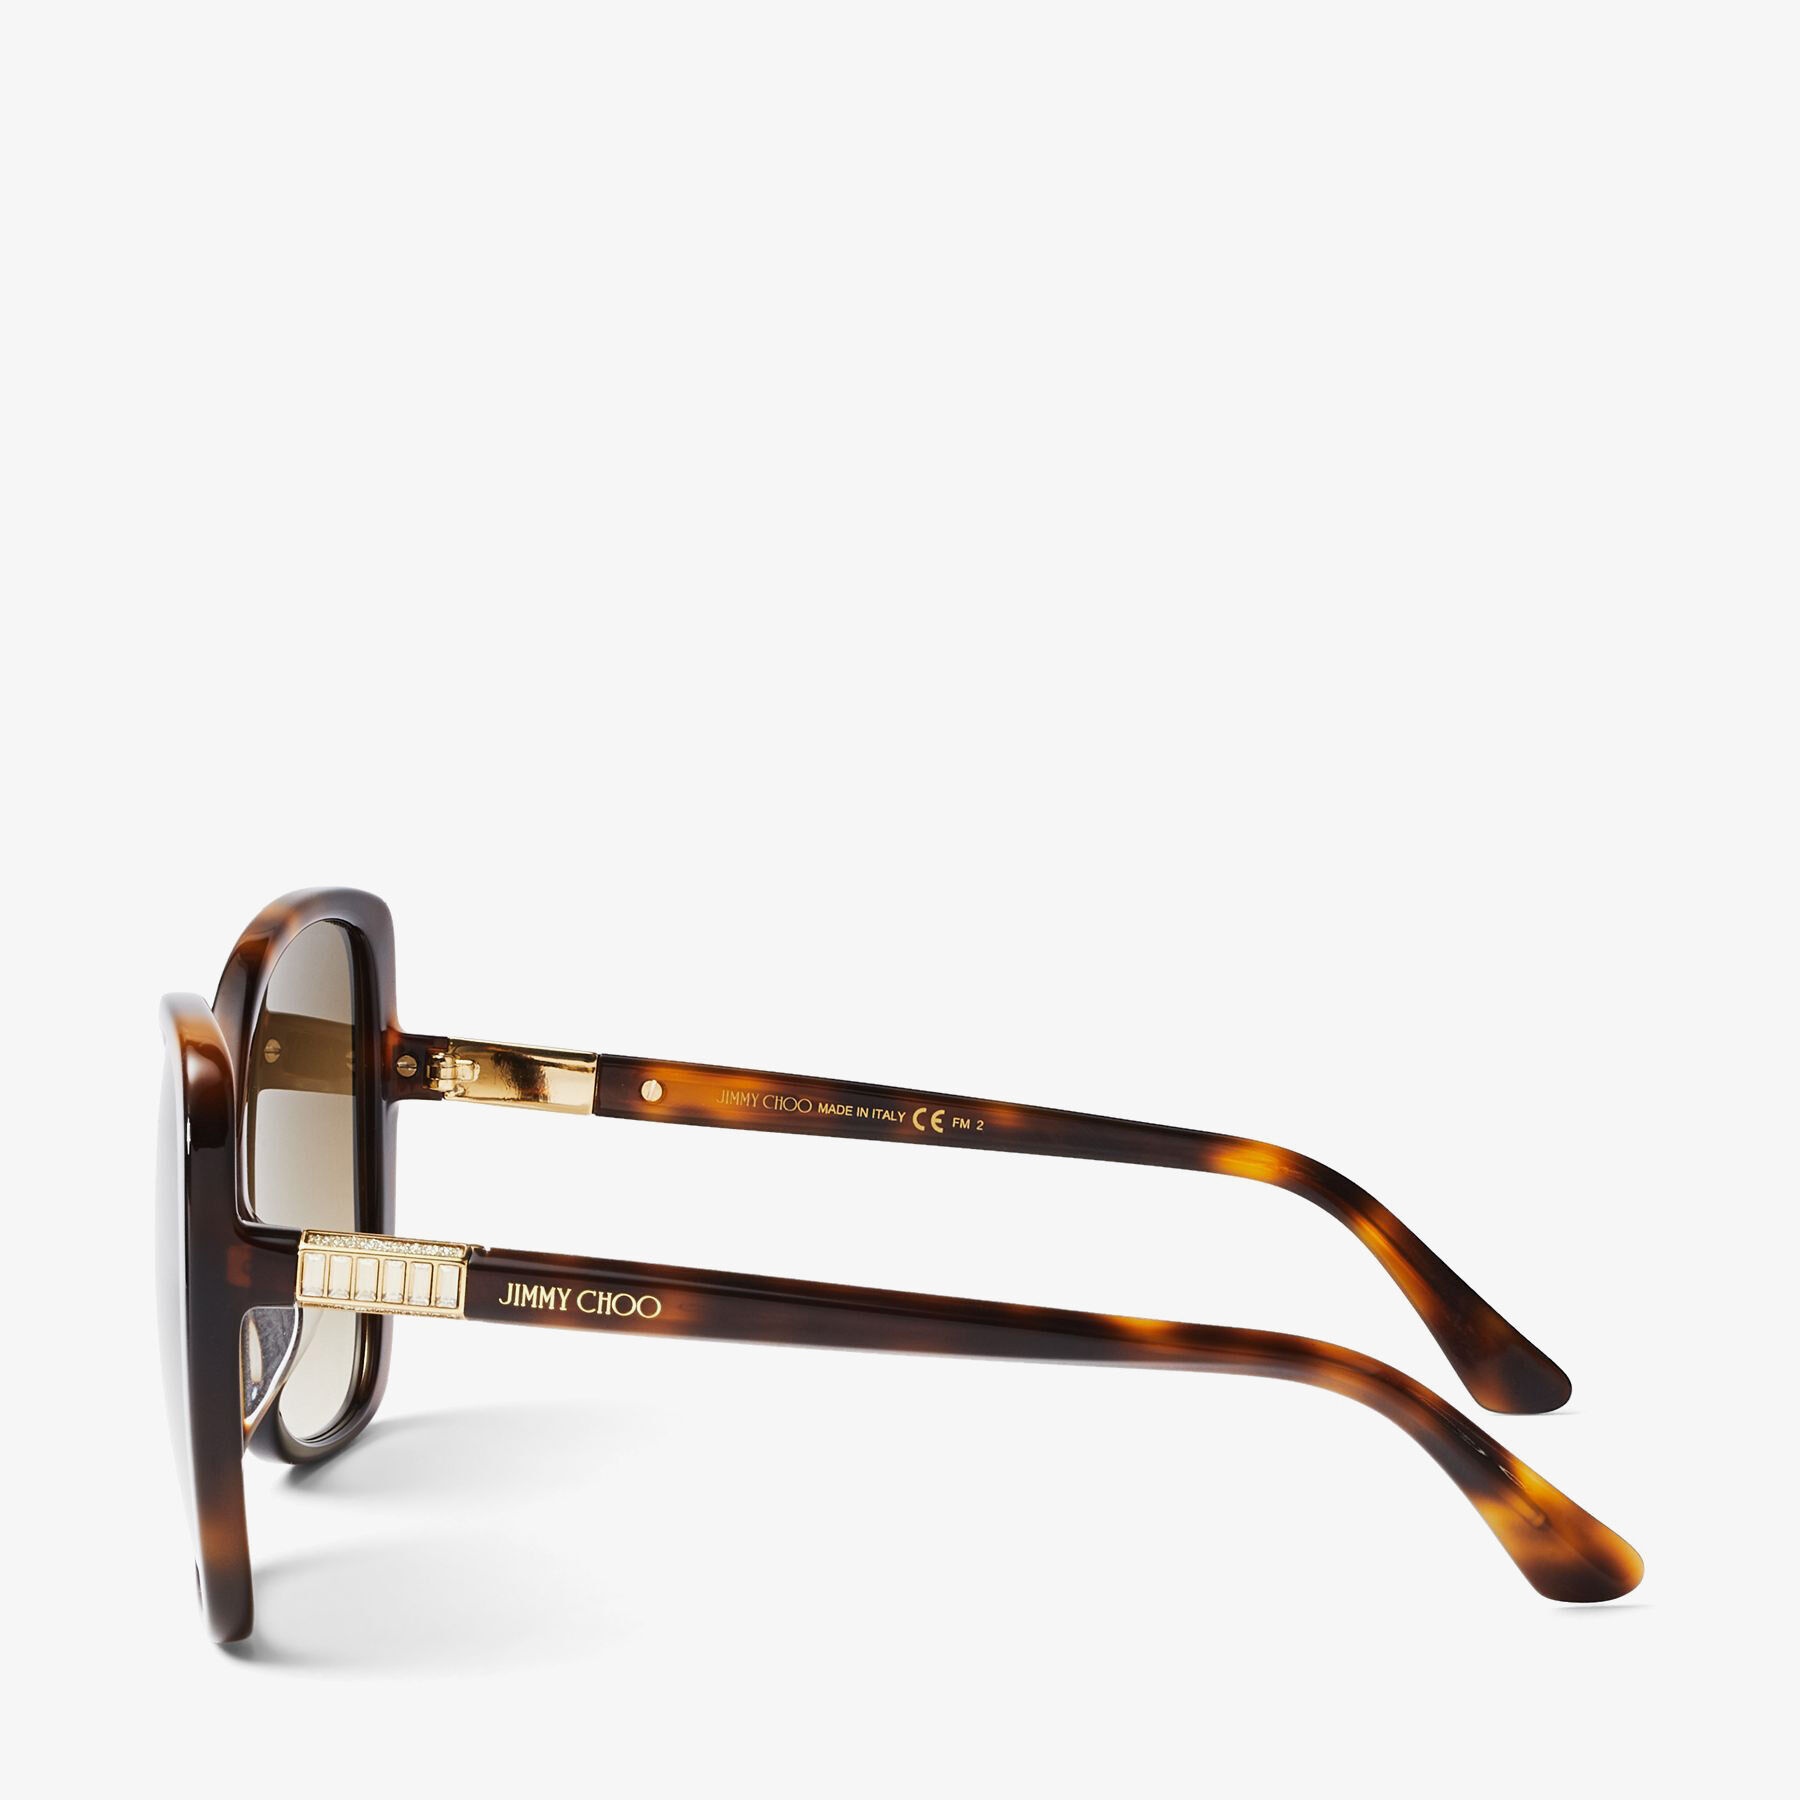 Becky/F/S 60
Dark Havana Oversized Sunglasses with Swarovski Crystal Embellishment - 2